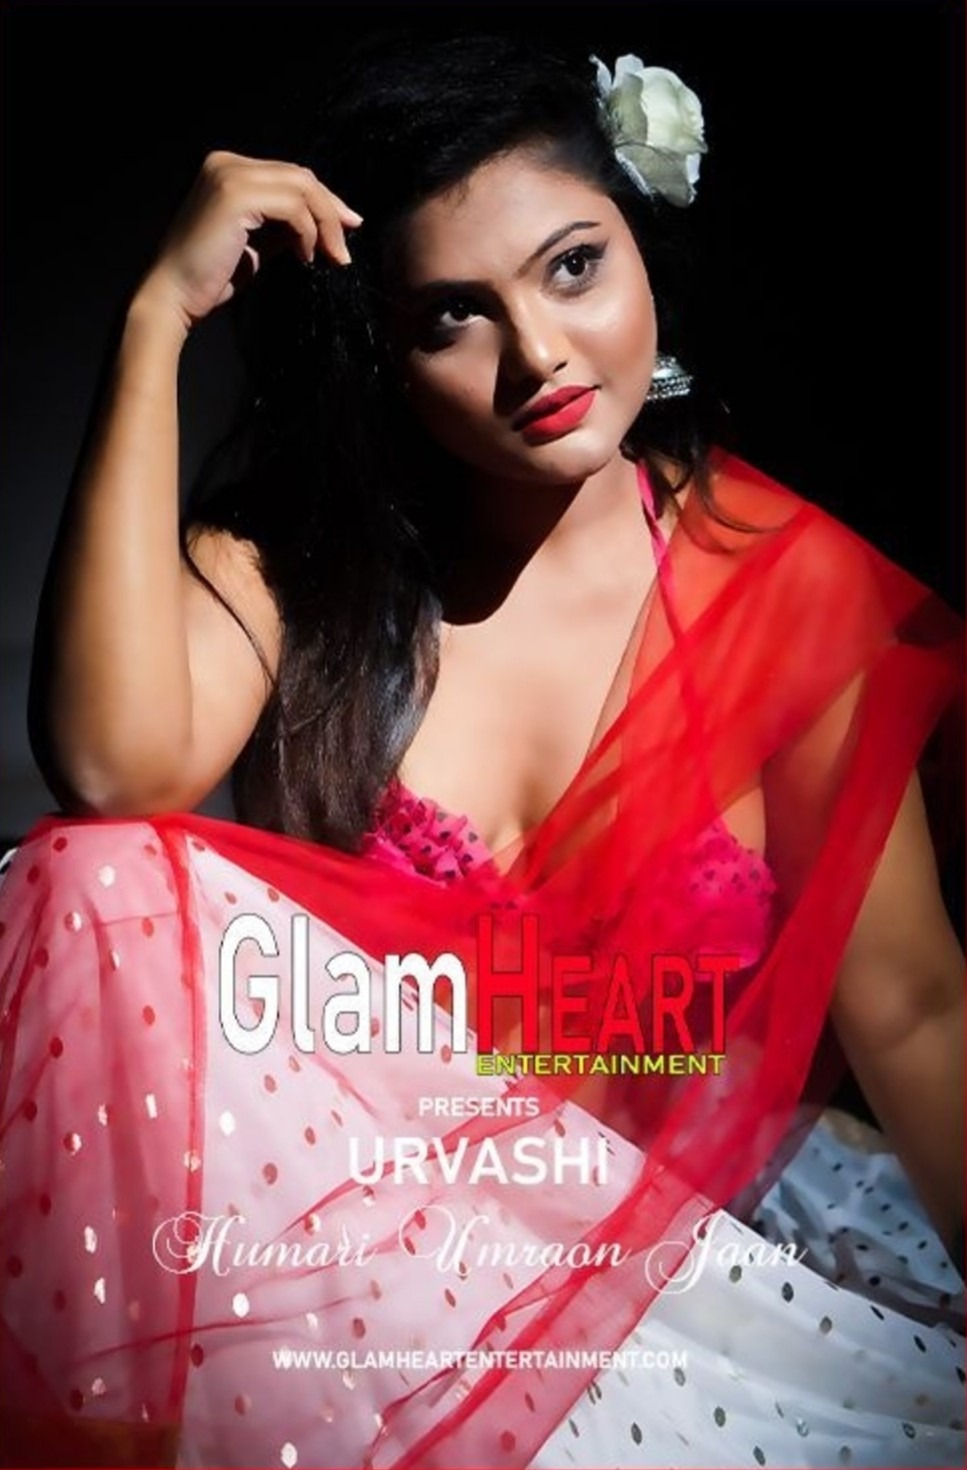 Glam heart entertainment